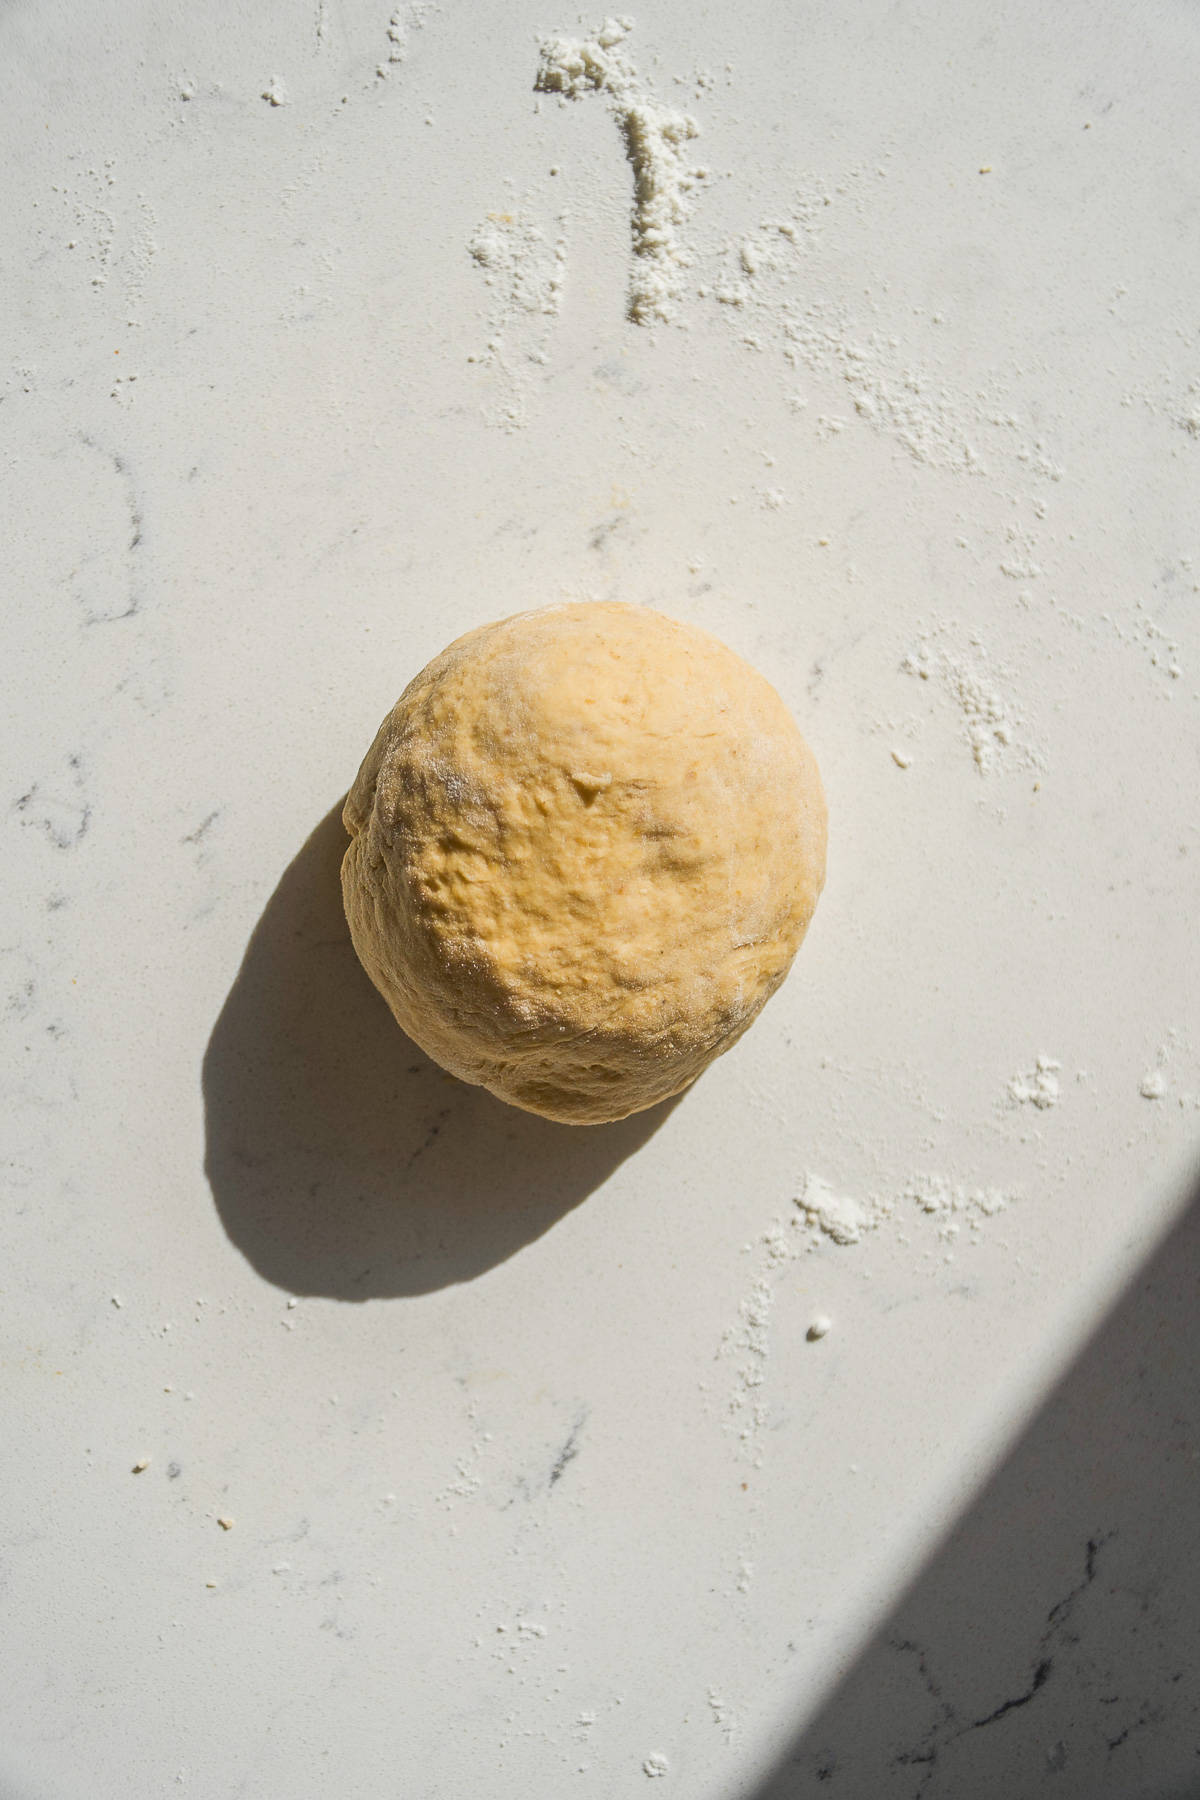 Pumpkin spice cinnamon roll dough in a round ball on a floured surface.